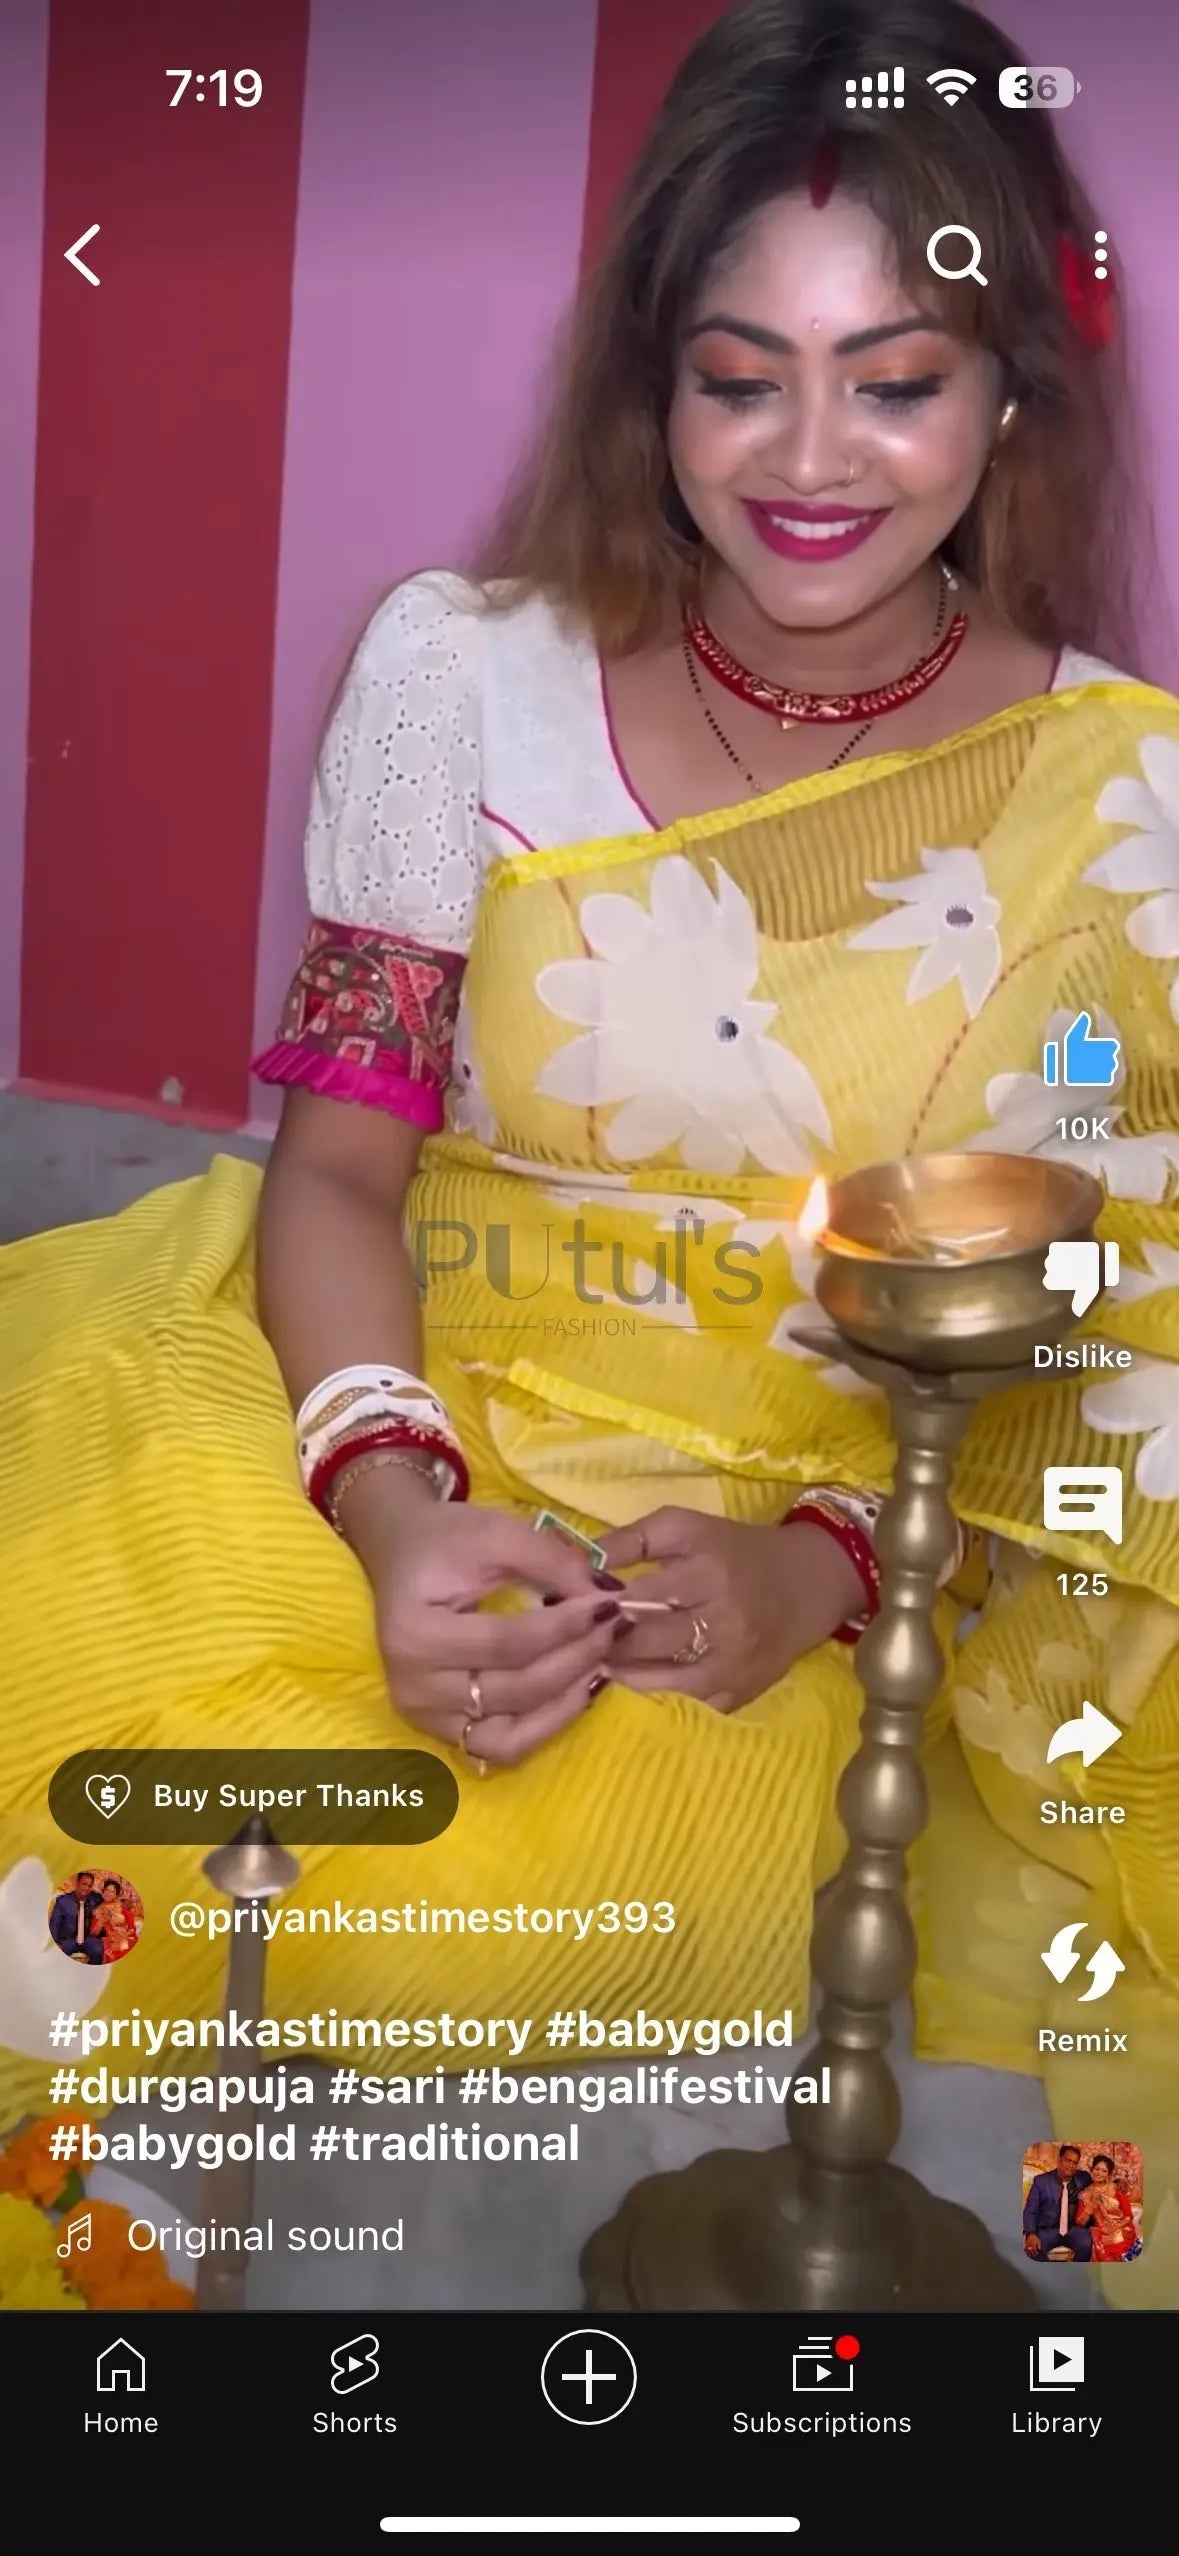 Mirror work Applique saree on noyel fabric yellow - handloom